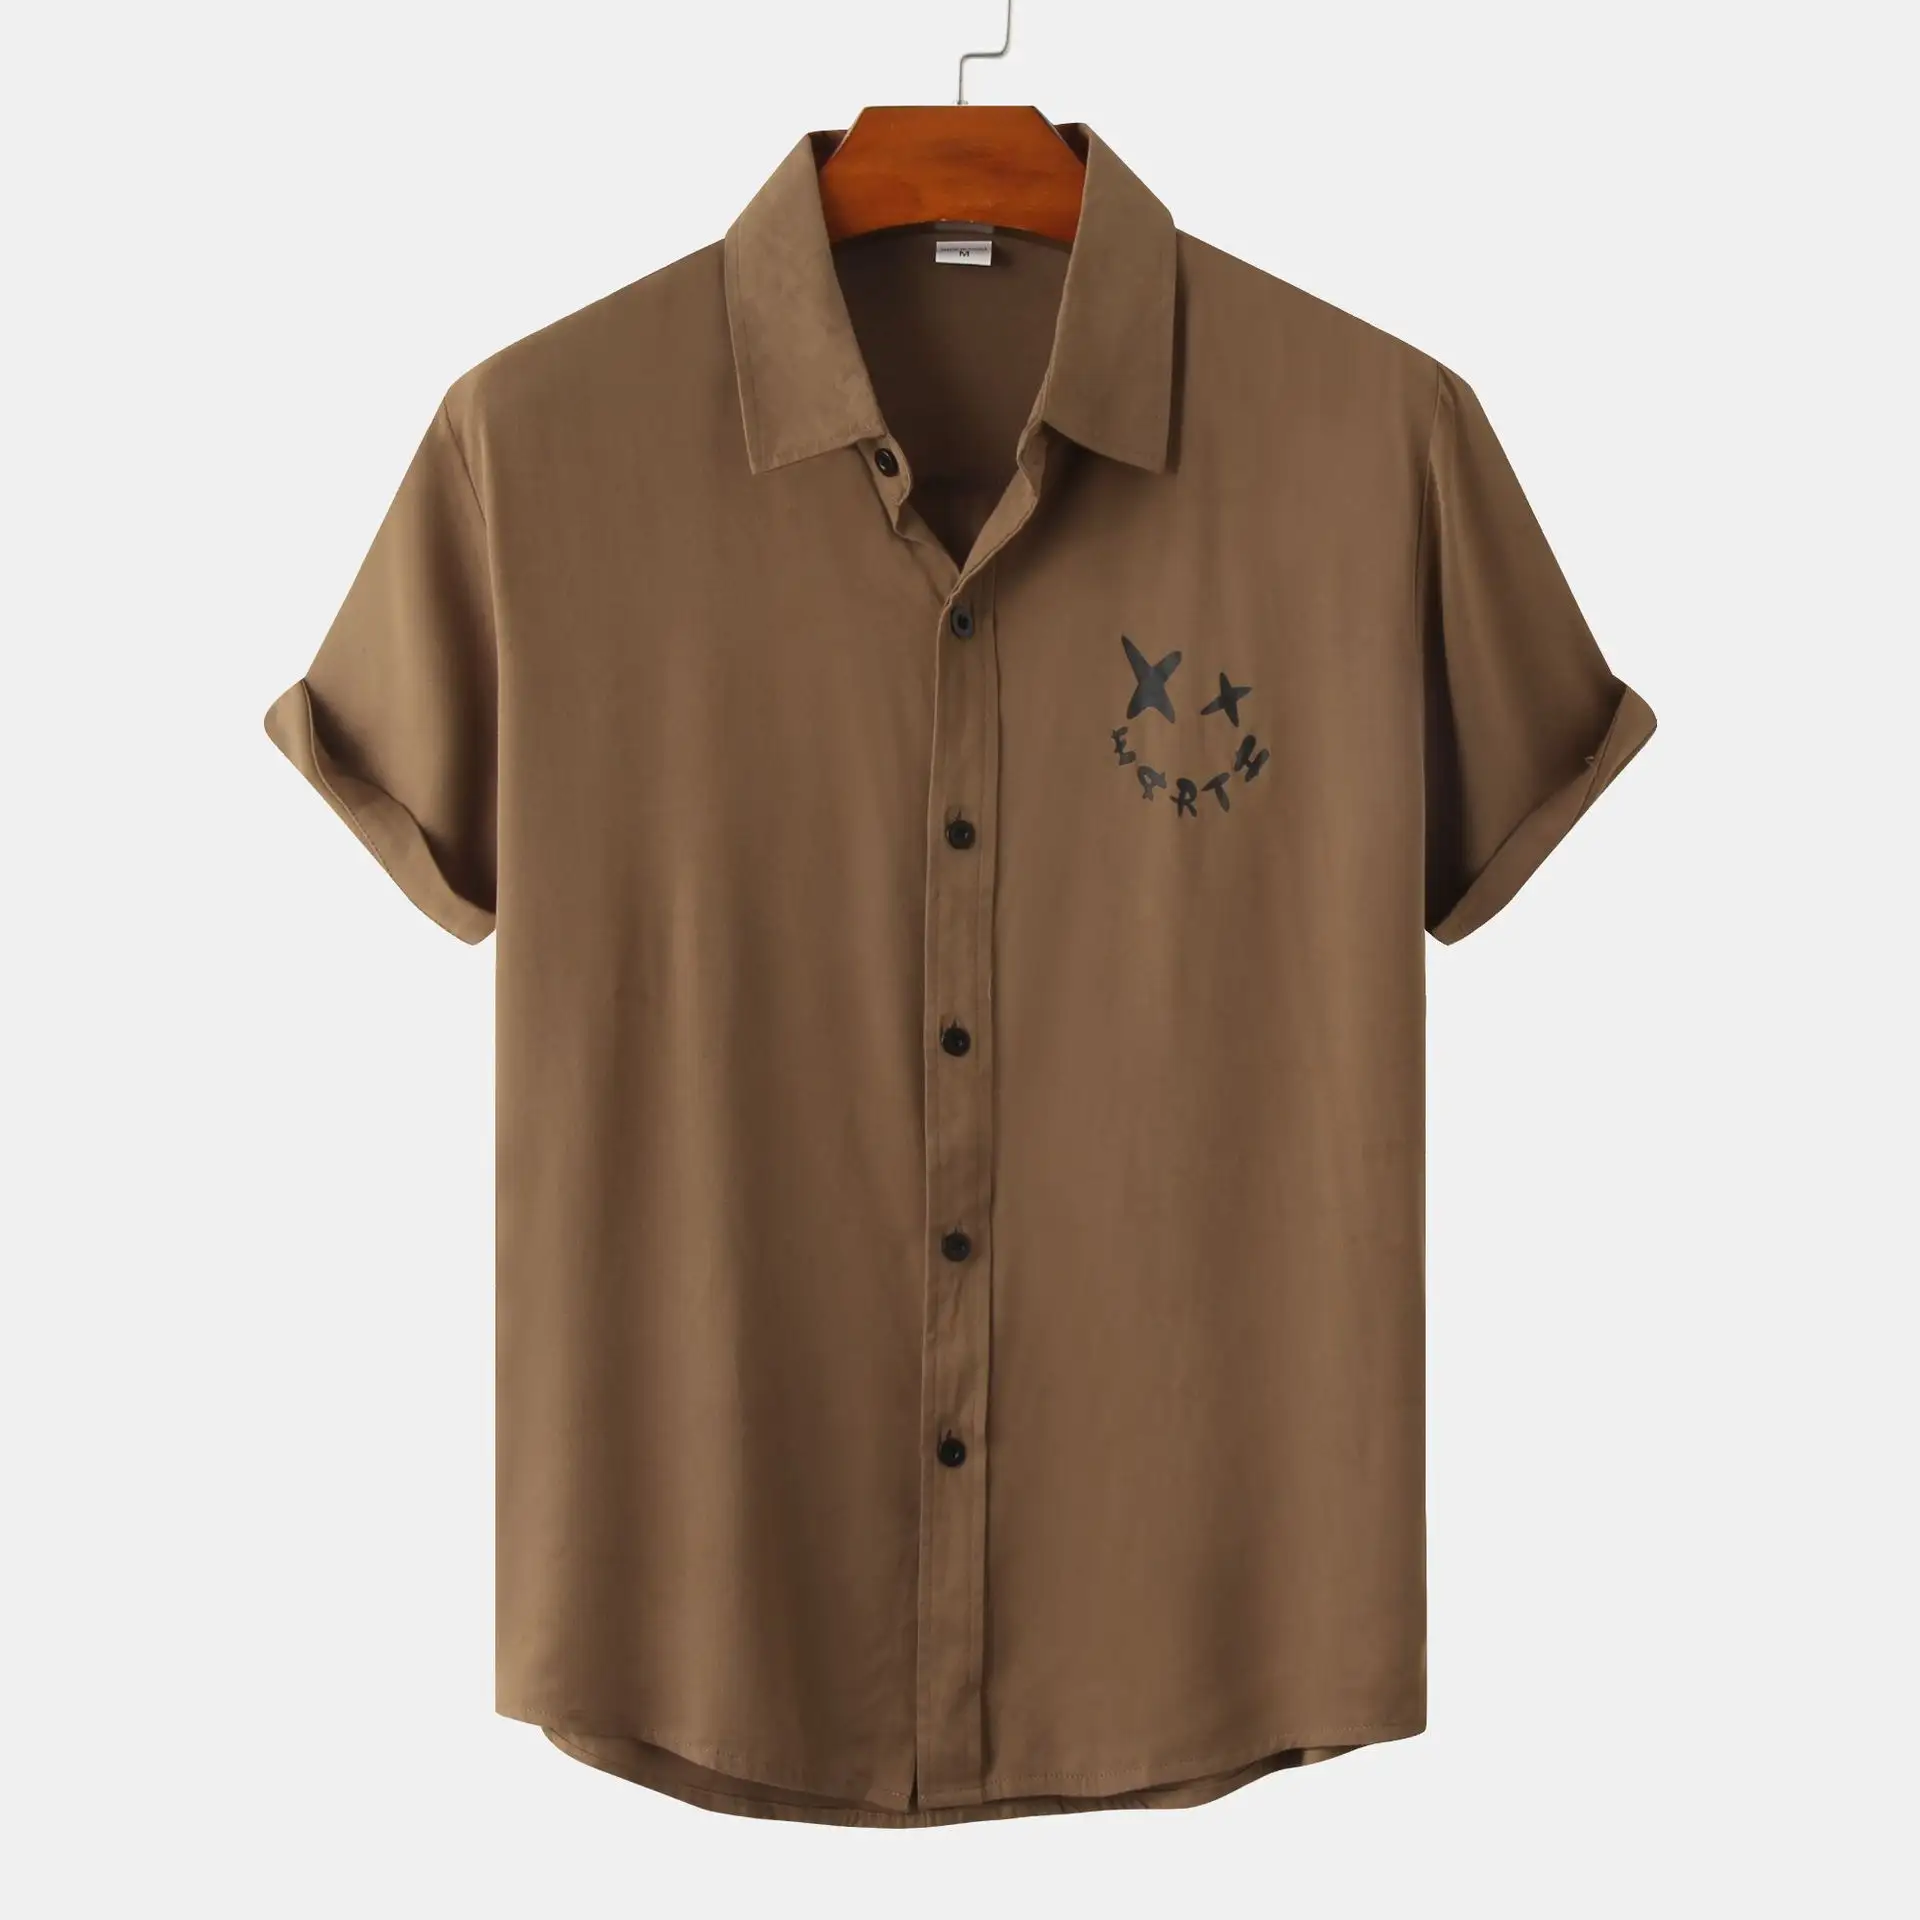 Men chinoiserie print casual shirt Classic Fashion Cotton Casual Shirts Shirt high quality Pocket Short sleeves blouse